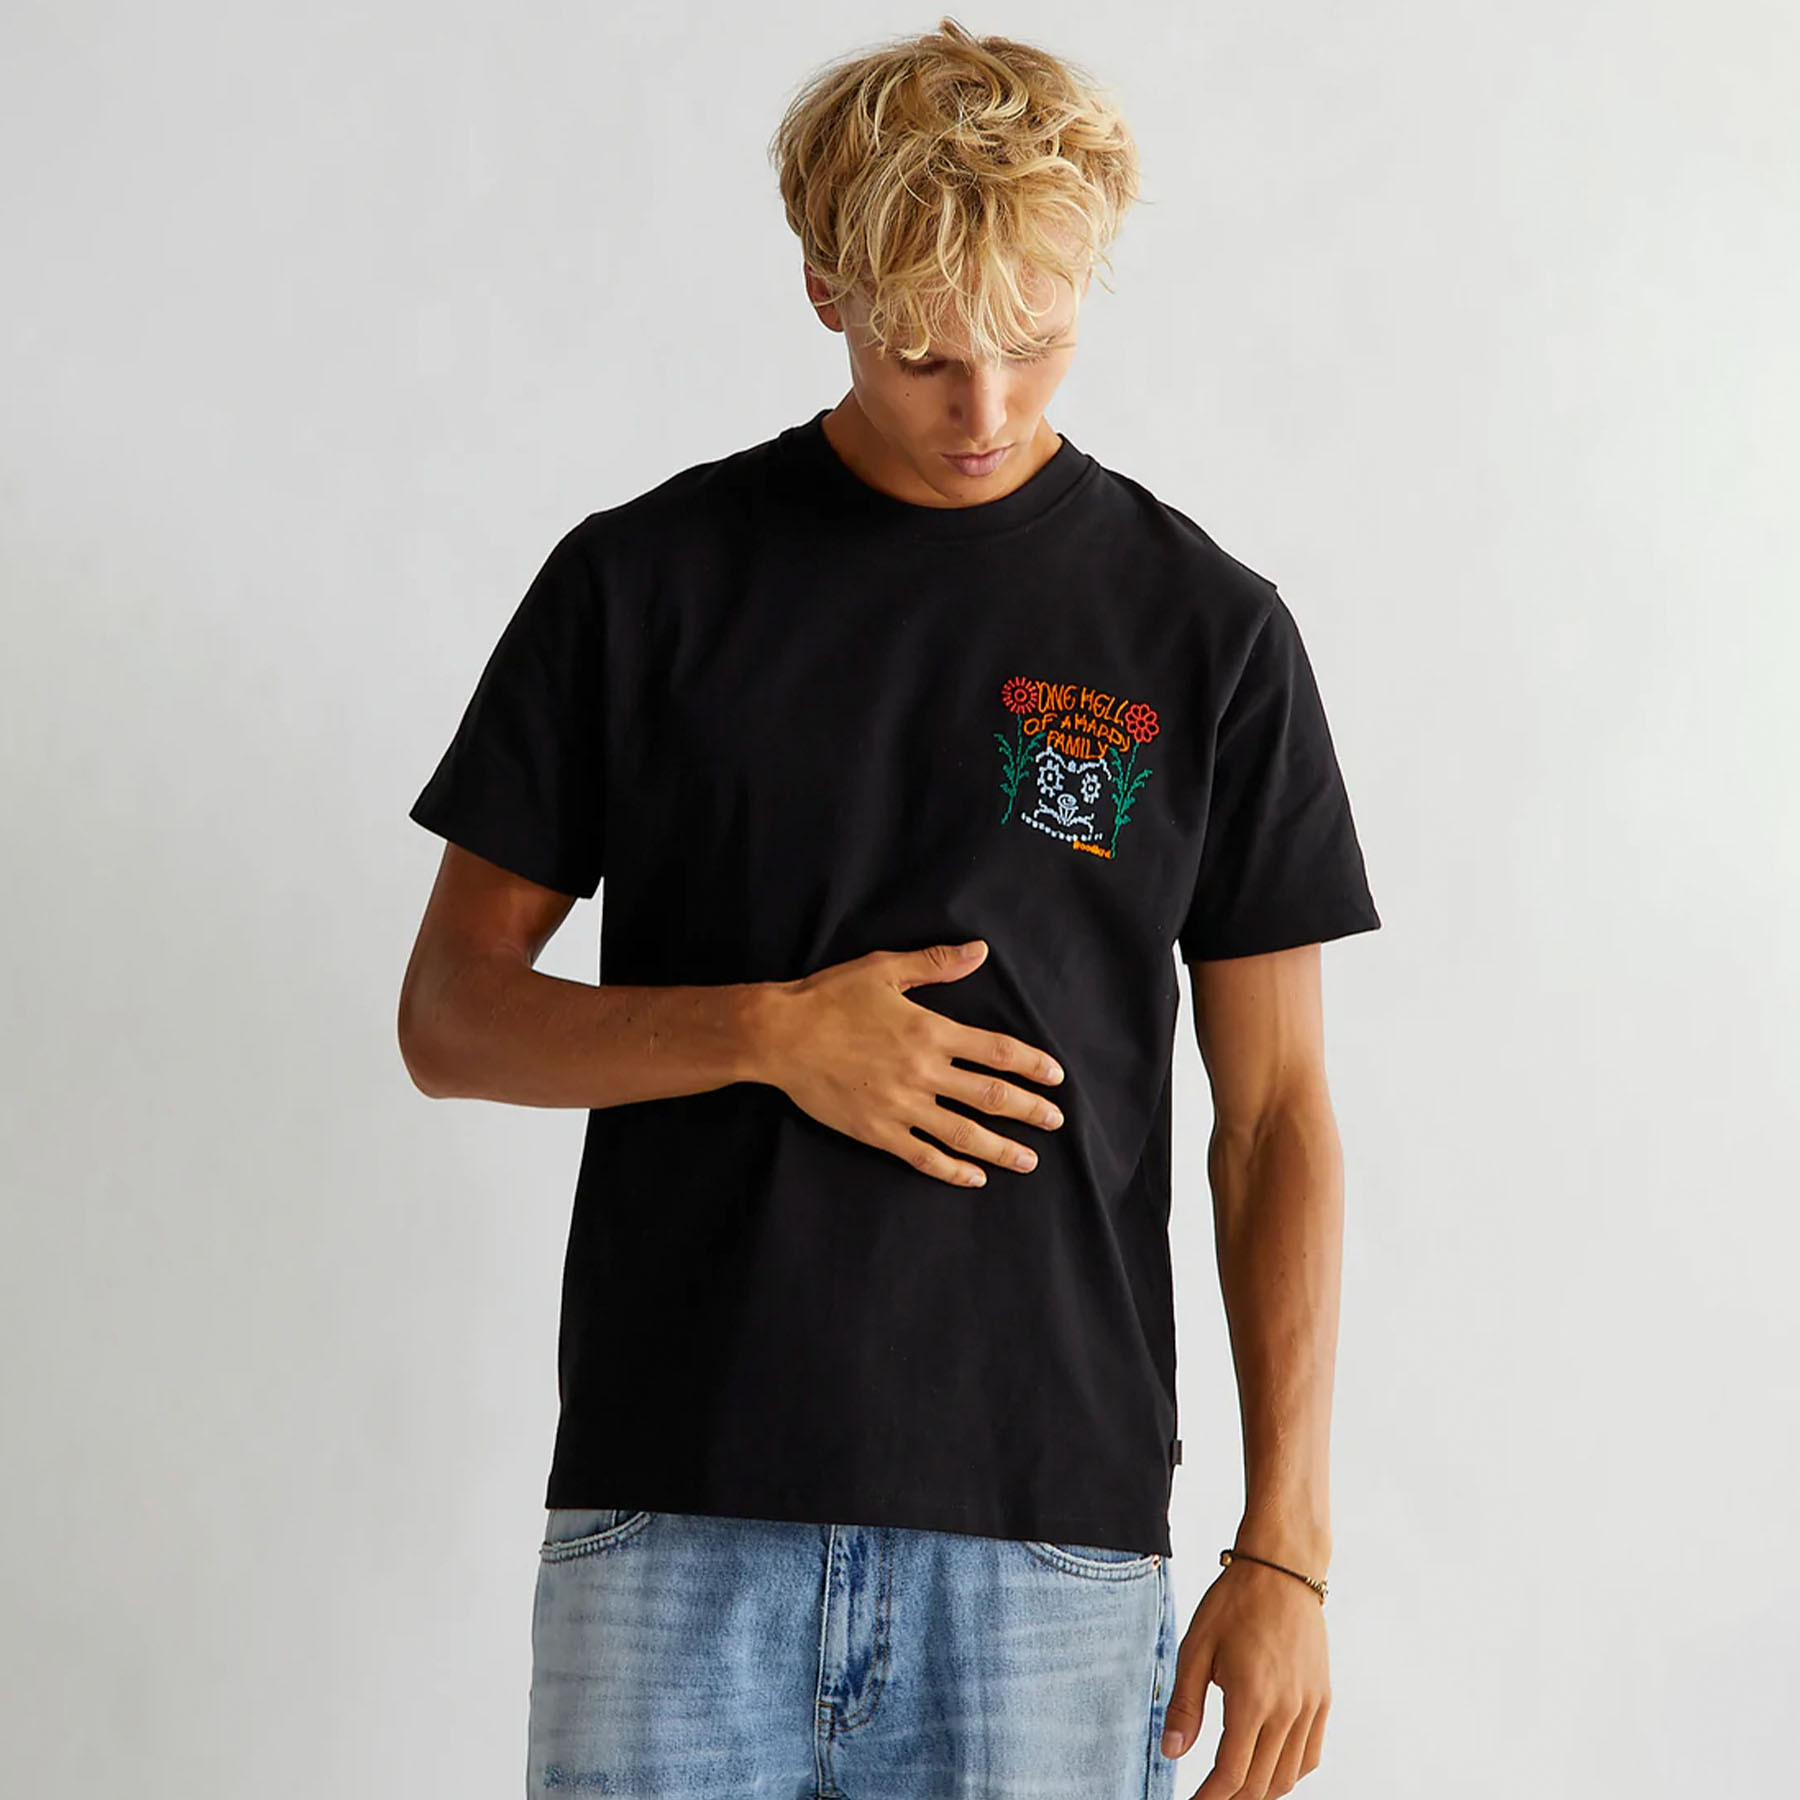 Woodbird - Rics family tee - T-shirts til mænd - Sort - XL